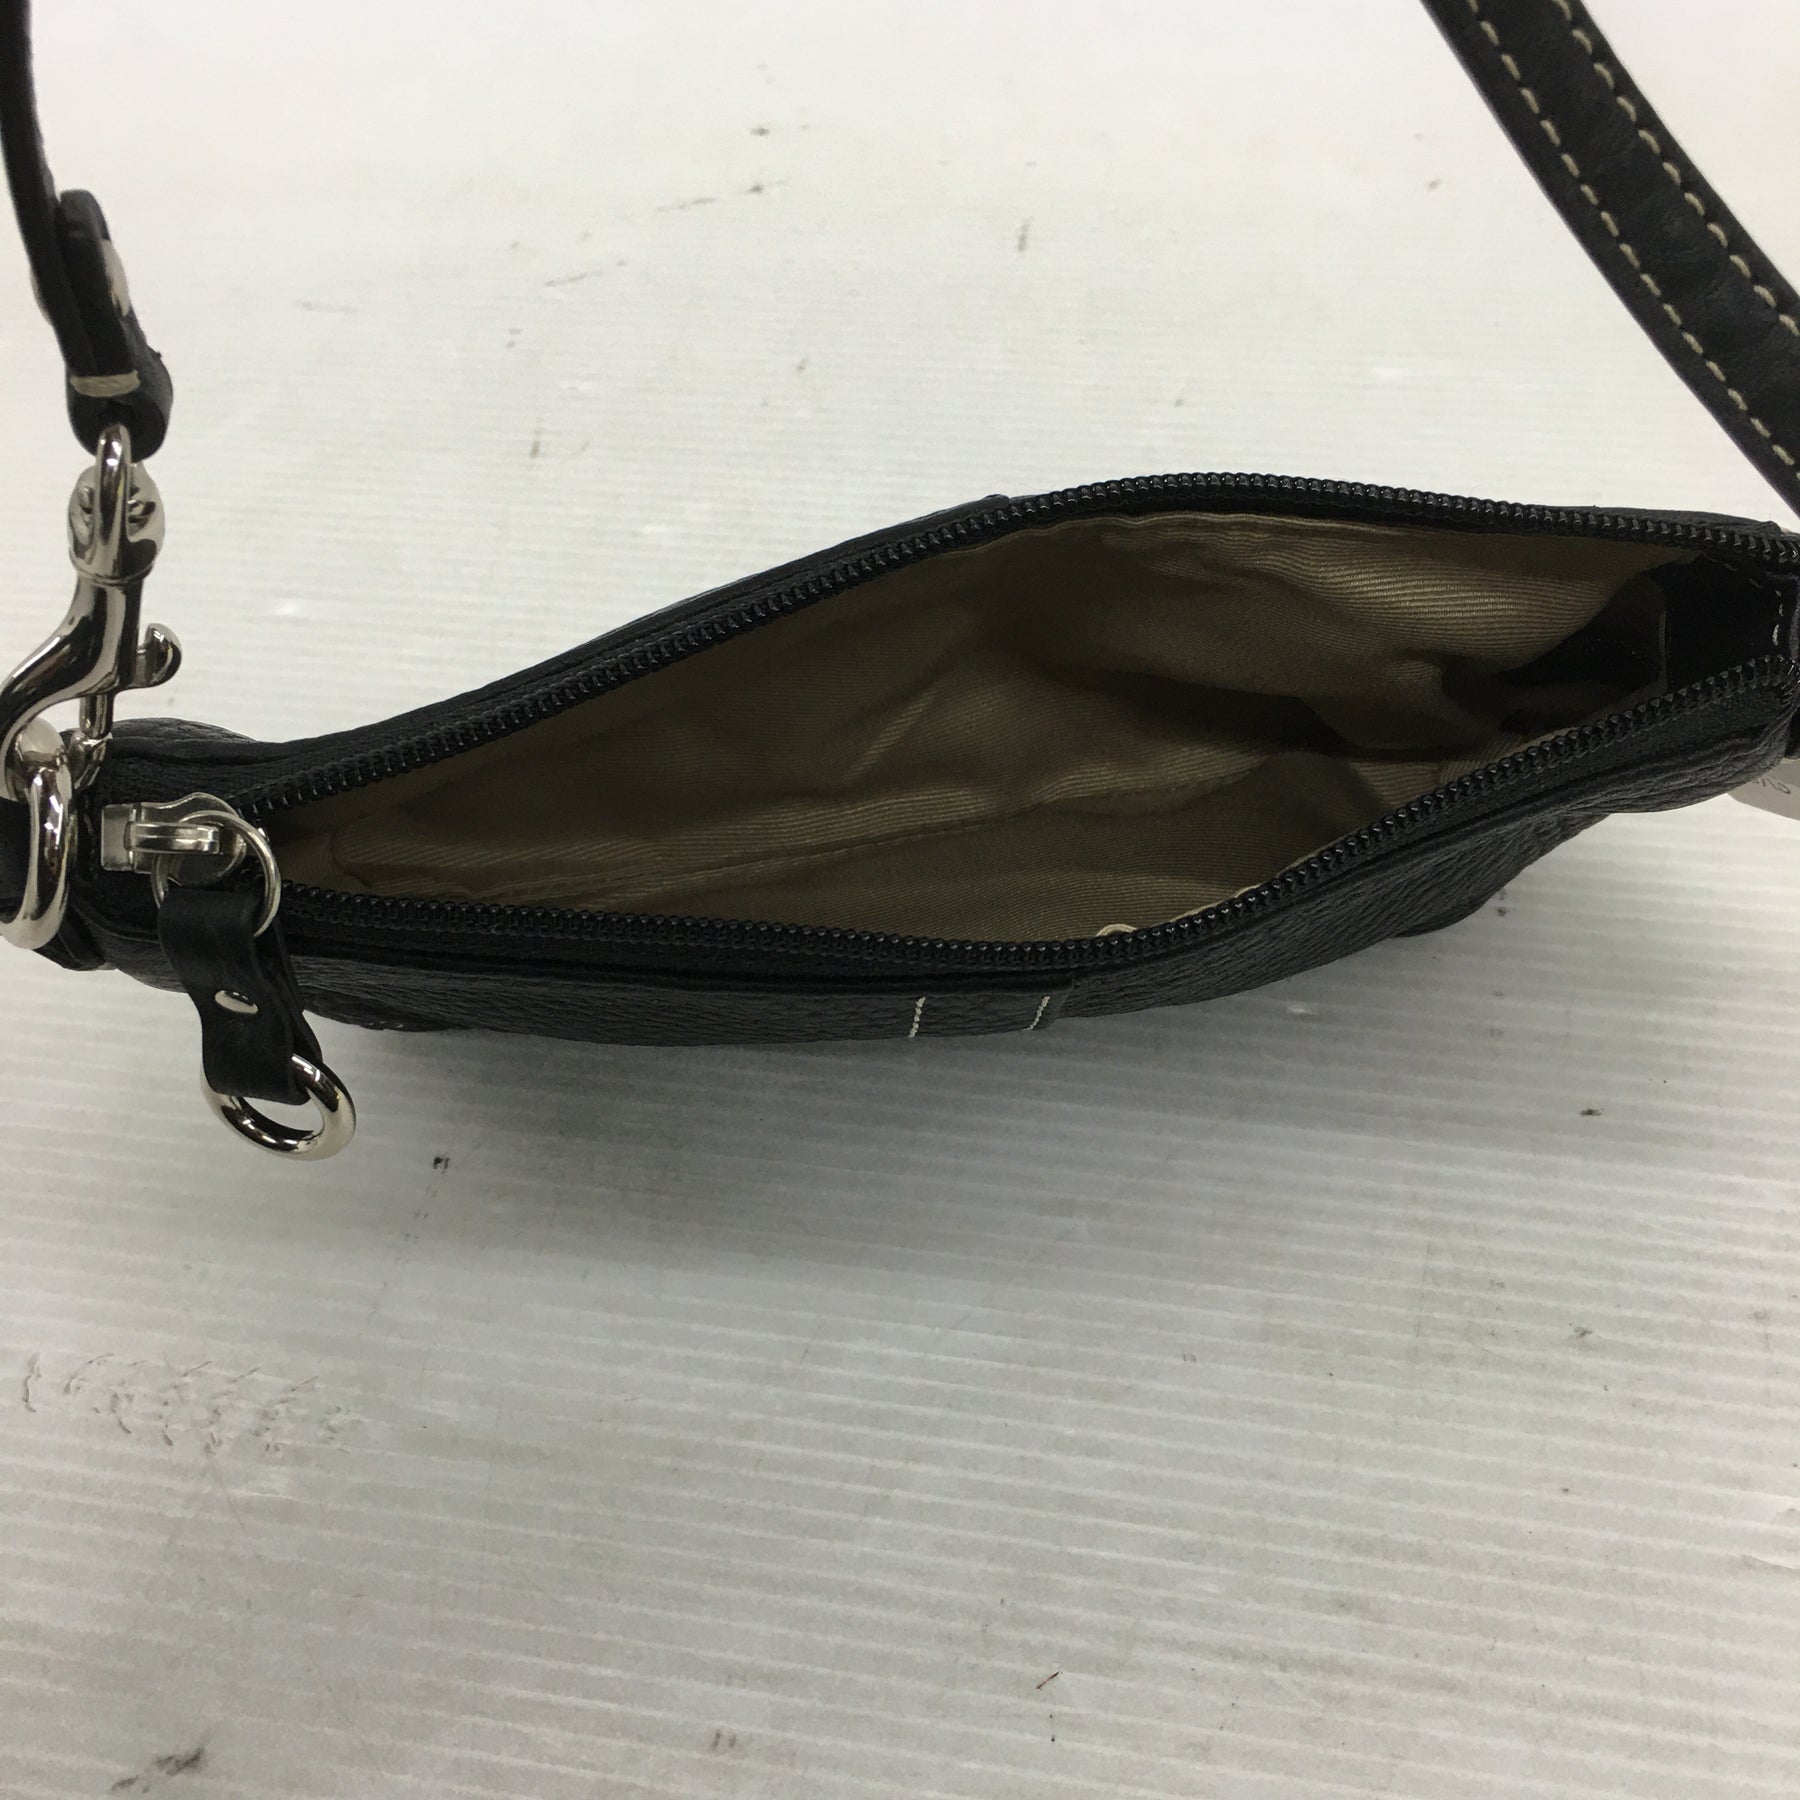 Lot of 3 Coach Micro Mini Leather Wristlet Shoulder Bag Handbag Wallet Purse